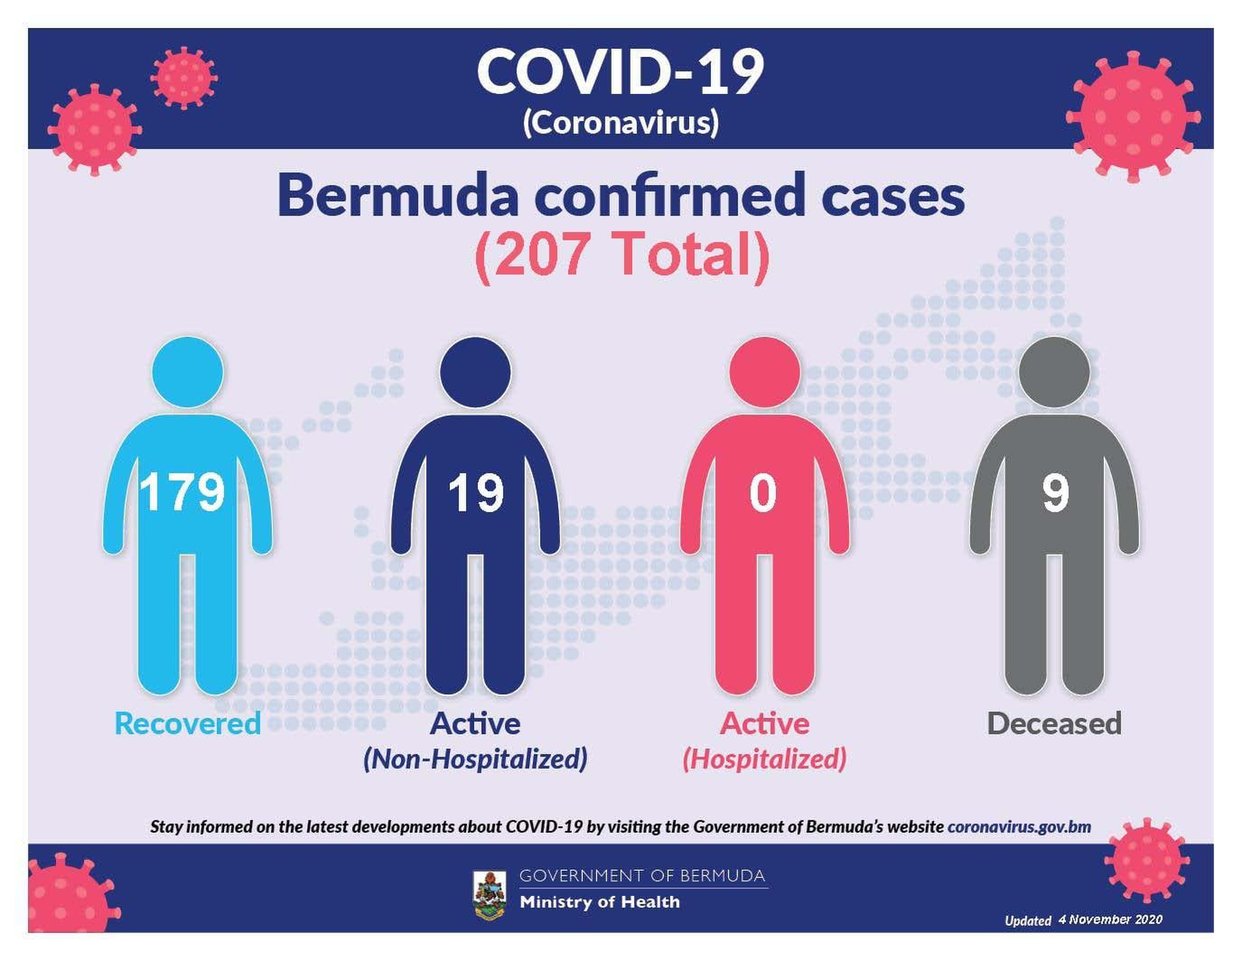 One new COVID-19 case reported in Bermuda, 5 November